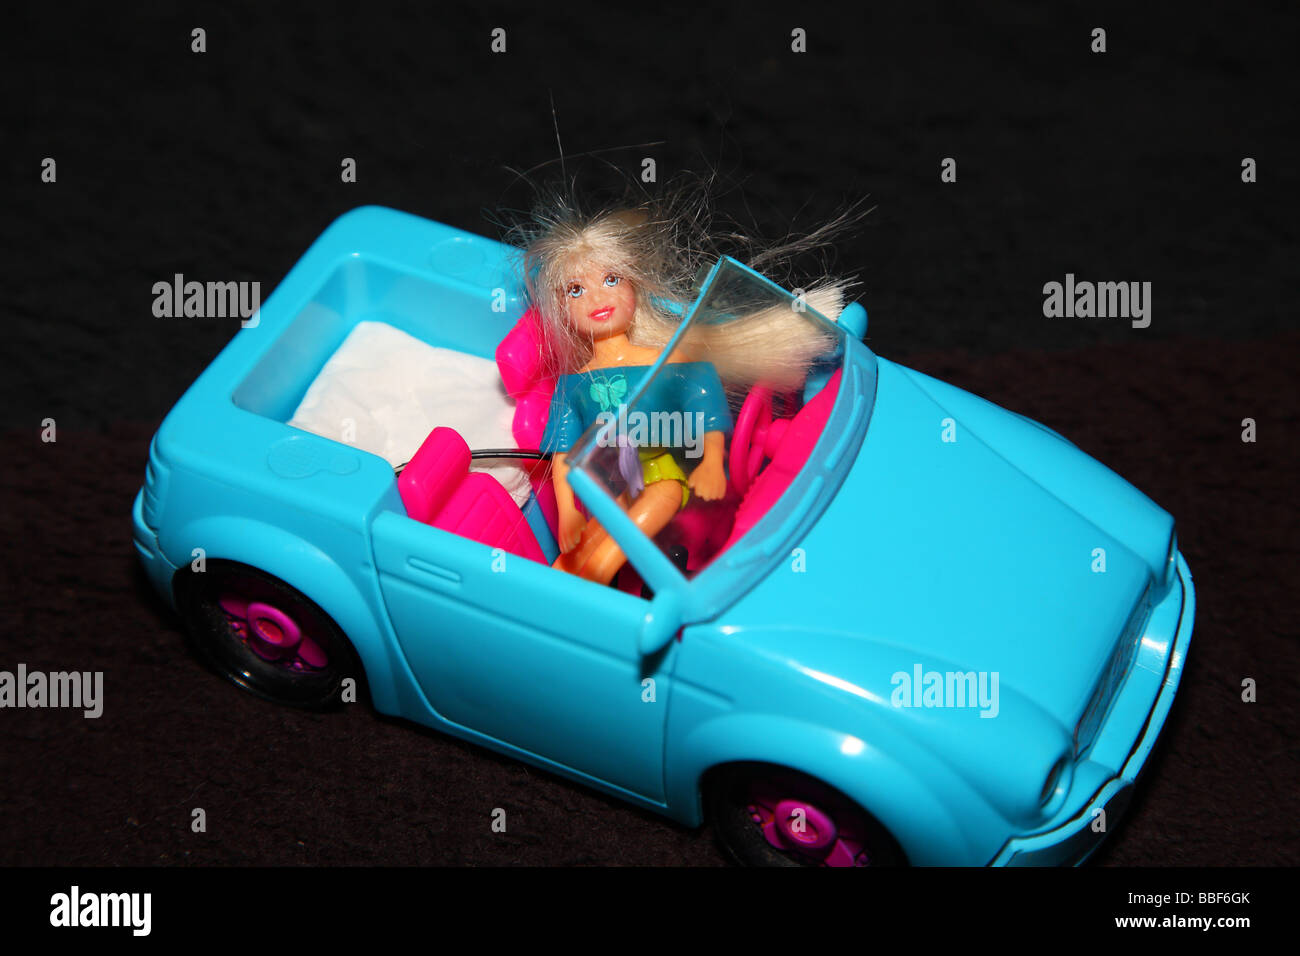 Blue Toy Car on dark background Stock Photo